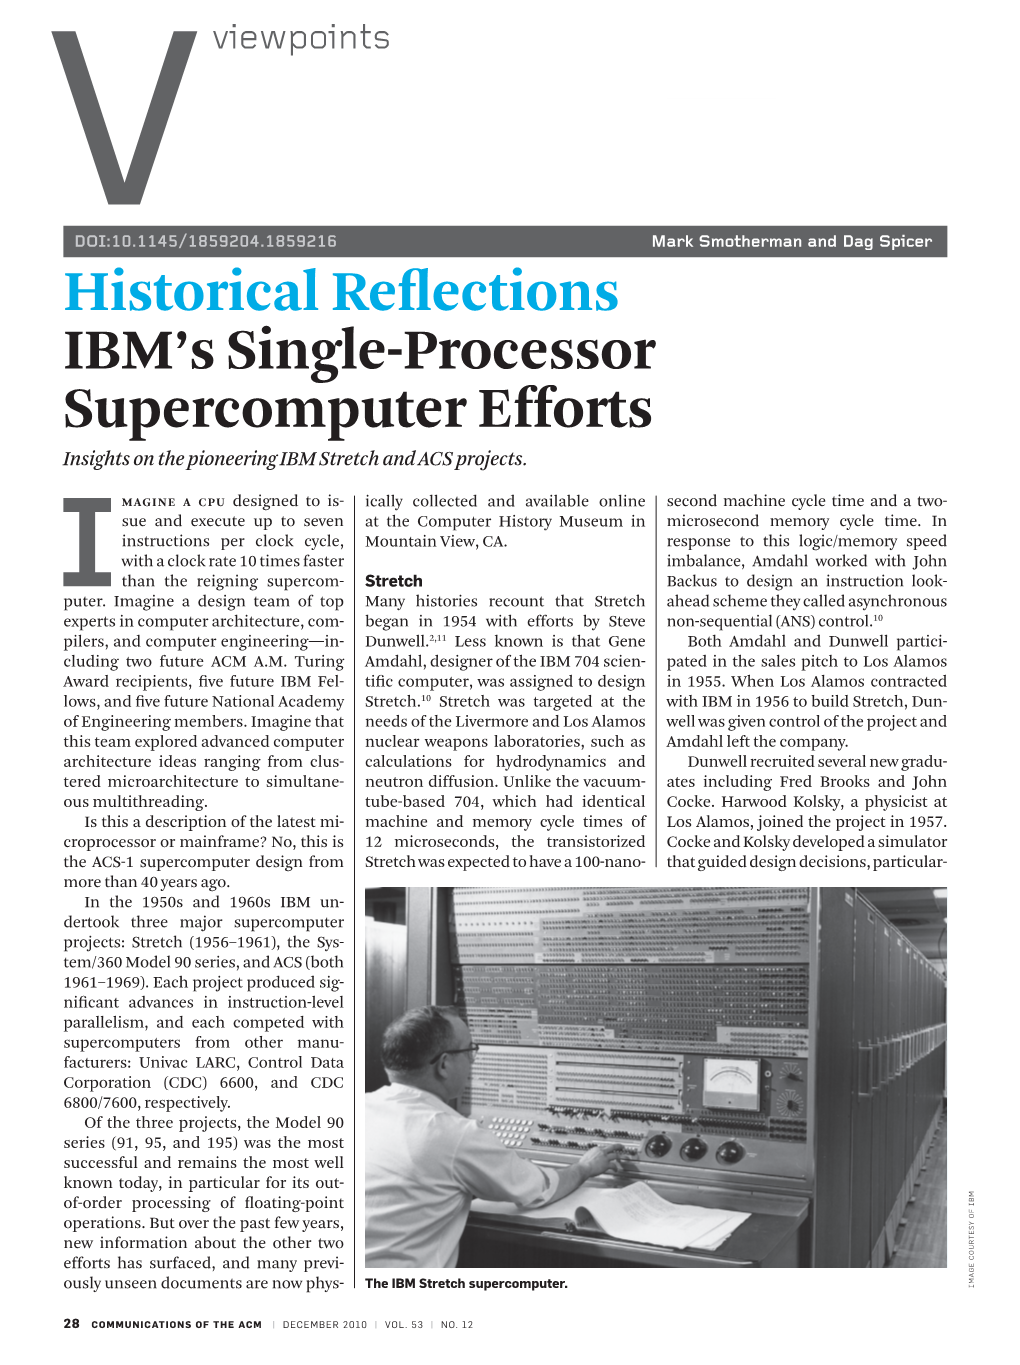 IBM's Single-Processor Supercomputer Efforts